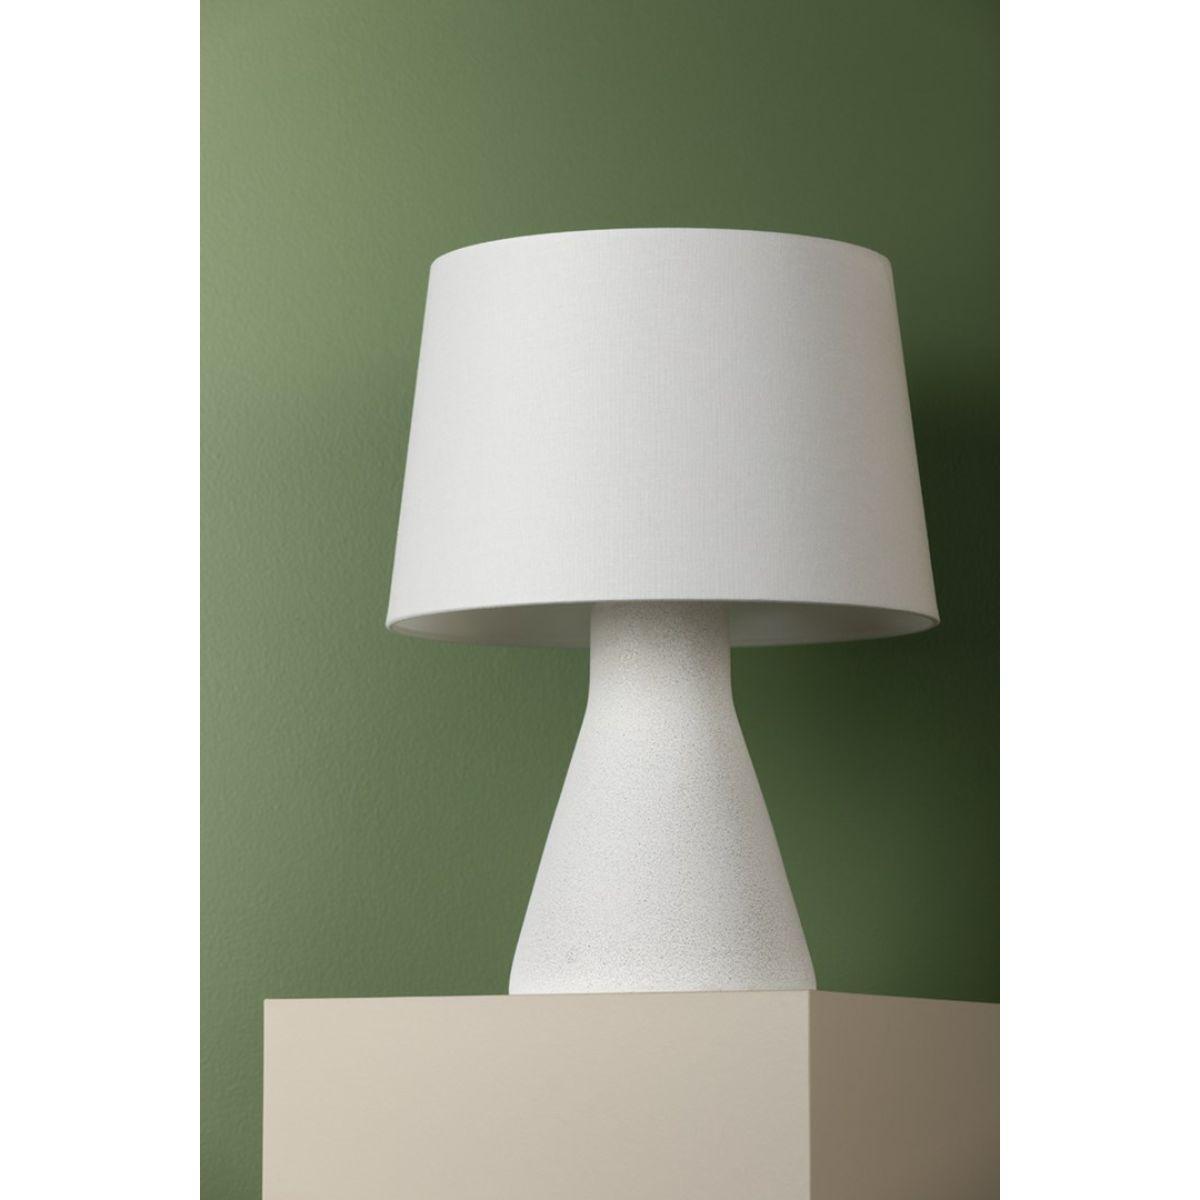 Raina Table Lamp Ceramic White Quartz with Aged Brass Accents